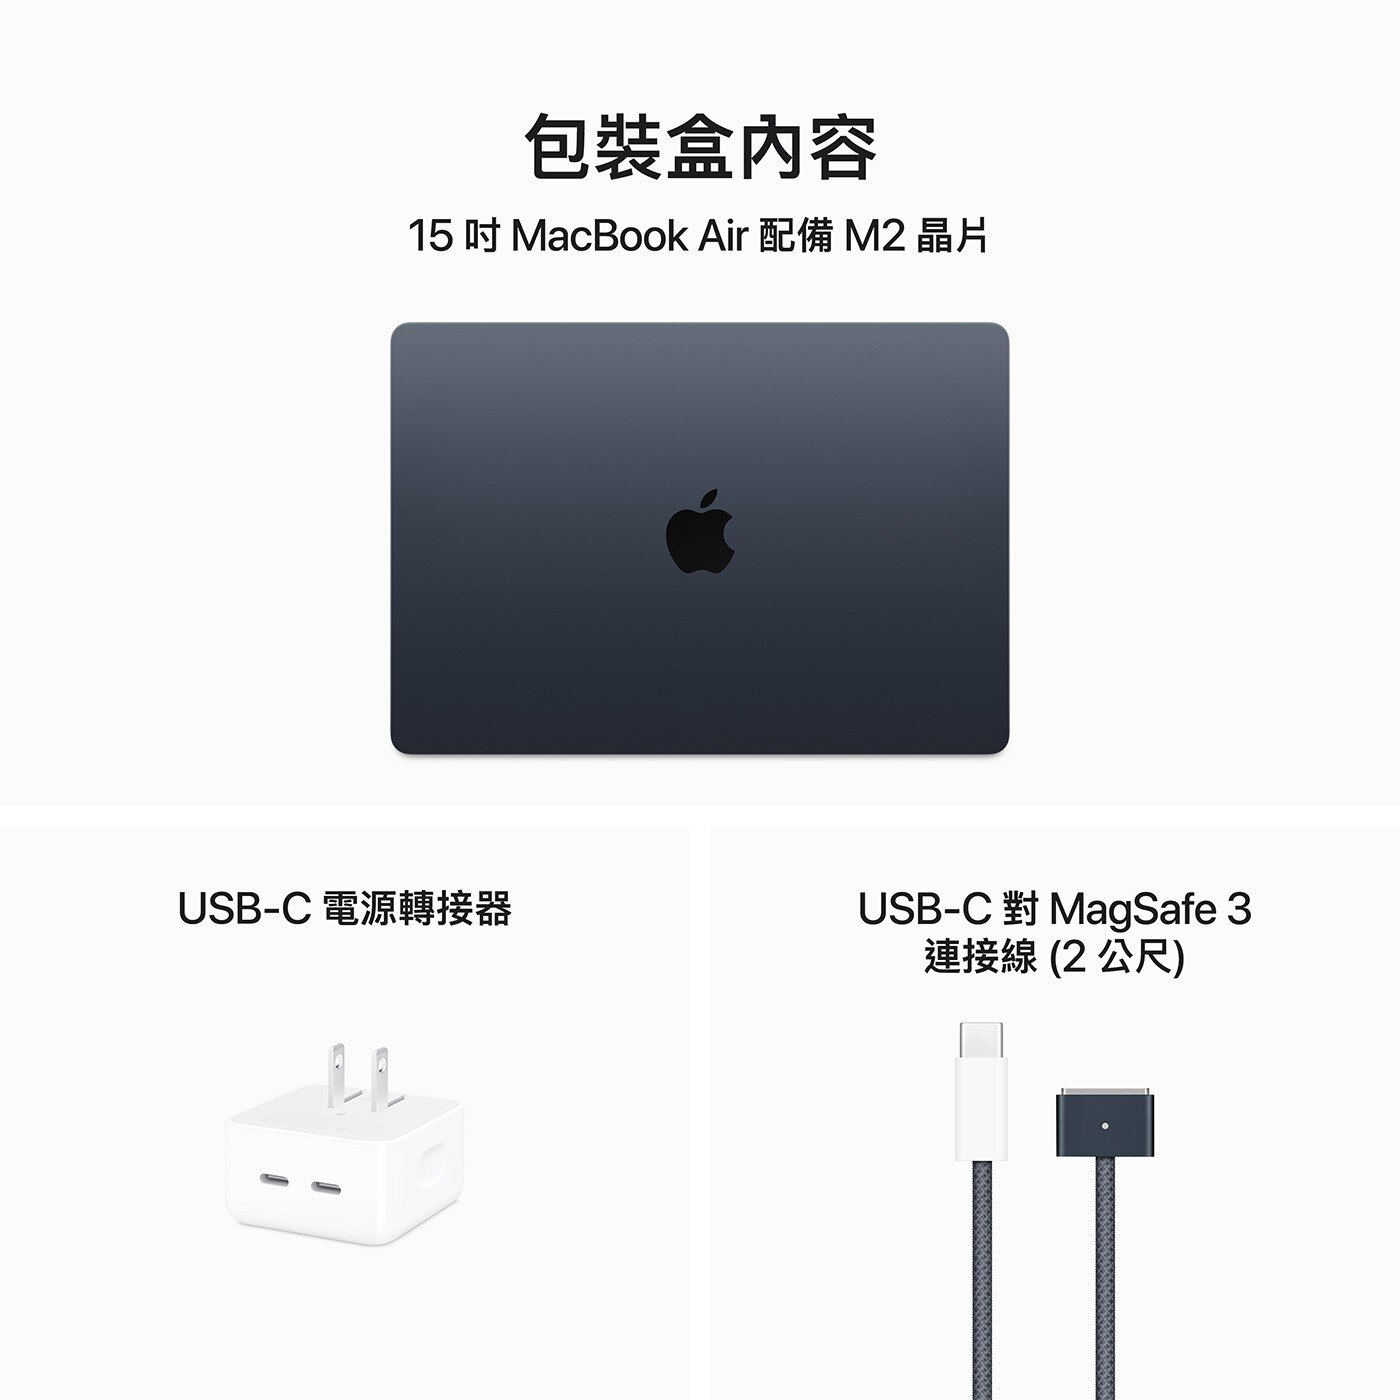 Apple MacBook Air 15吋 配備 M2晶片8核心 CPU 10核心 GPU 8GB 256GB SSD 午夜色